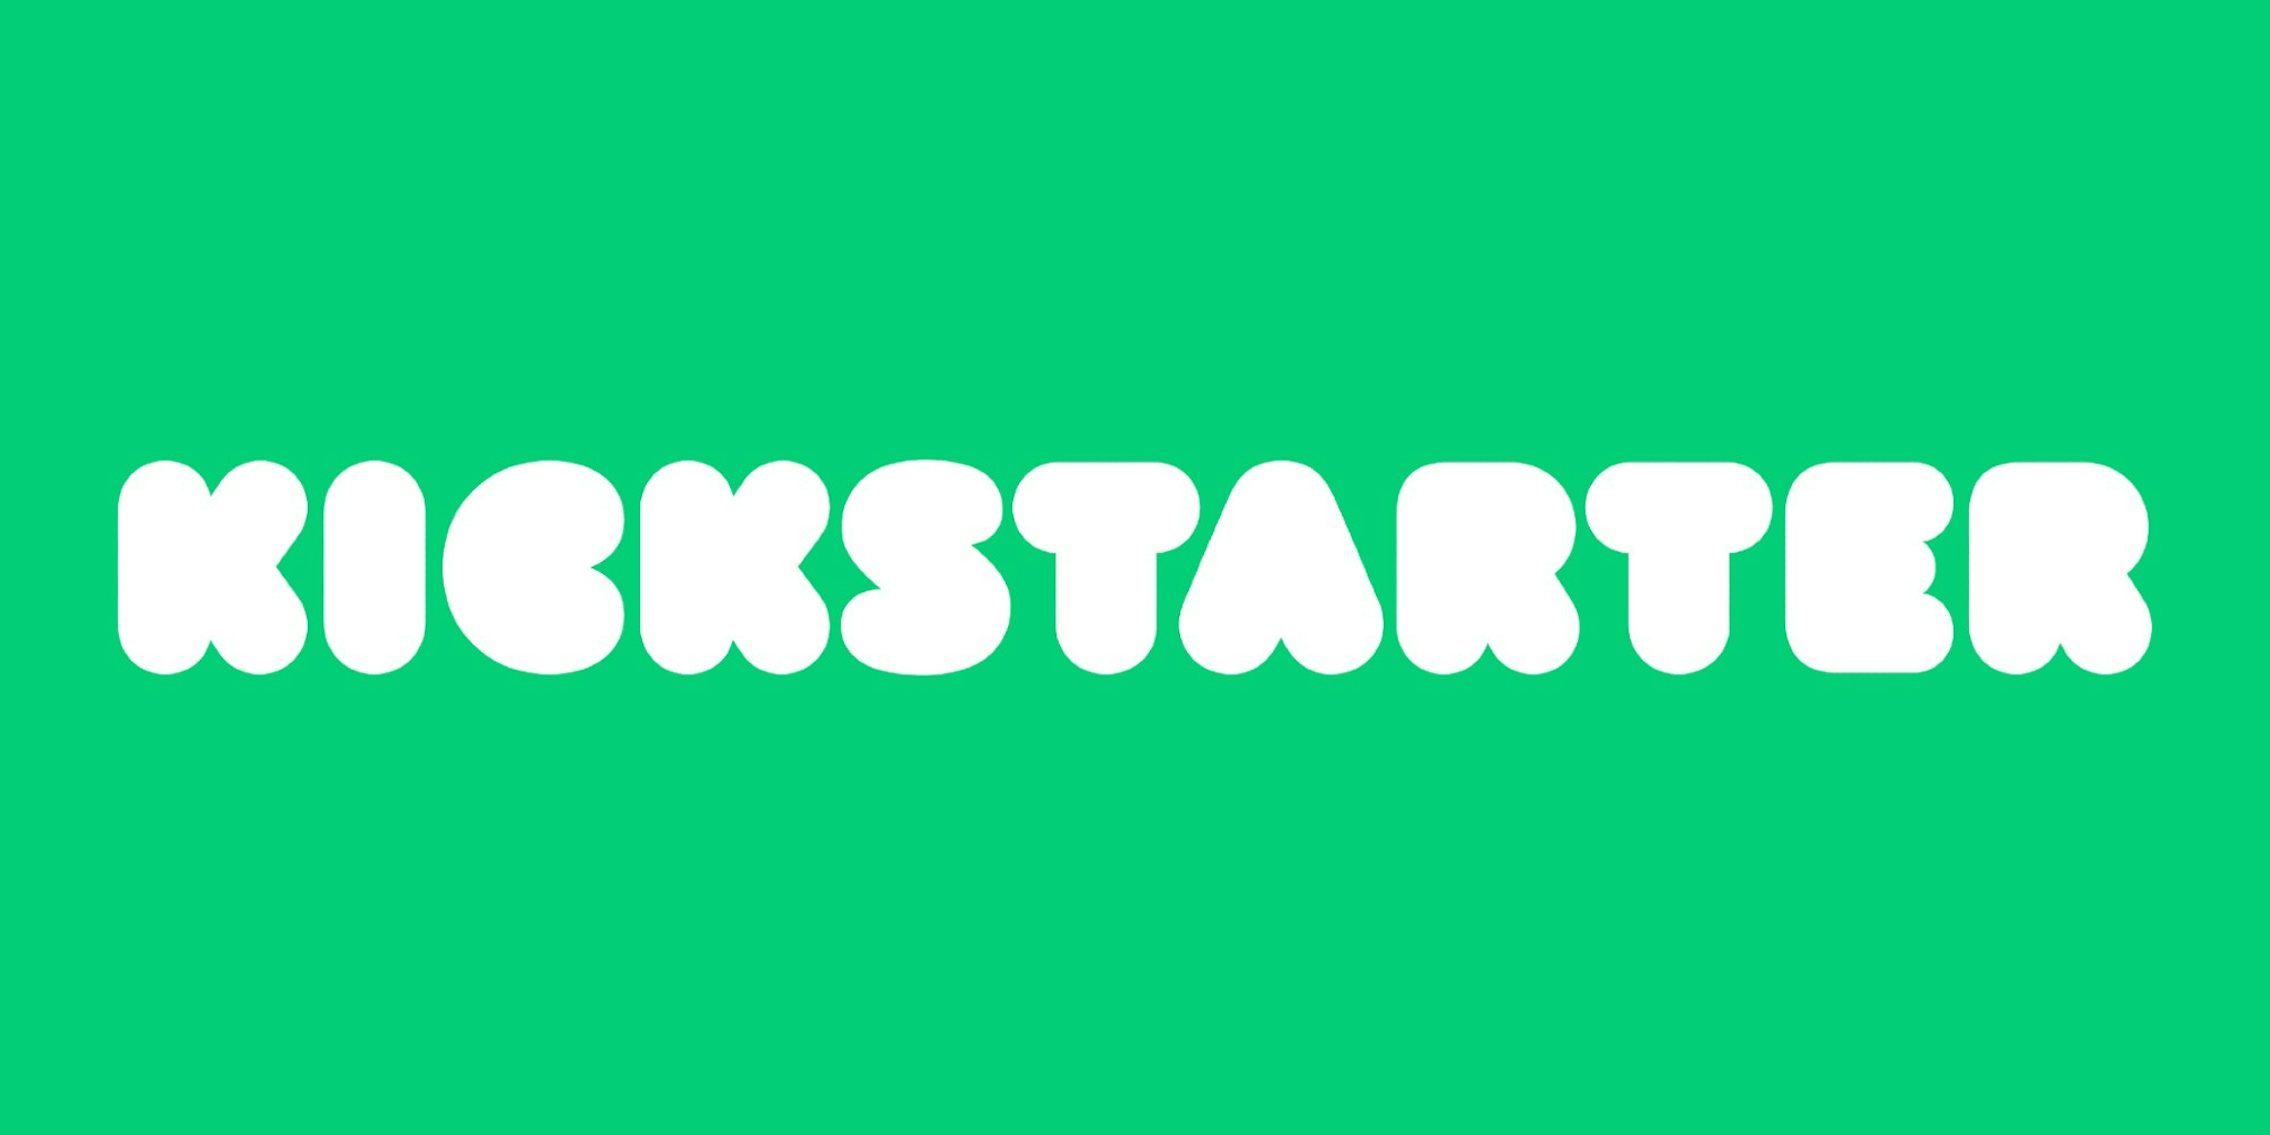 The Kickstarter logo